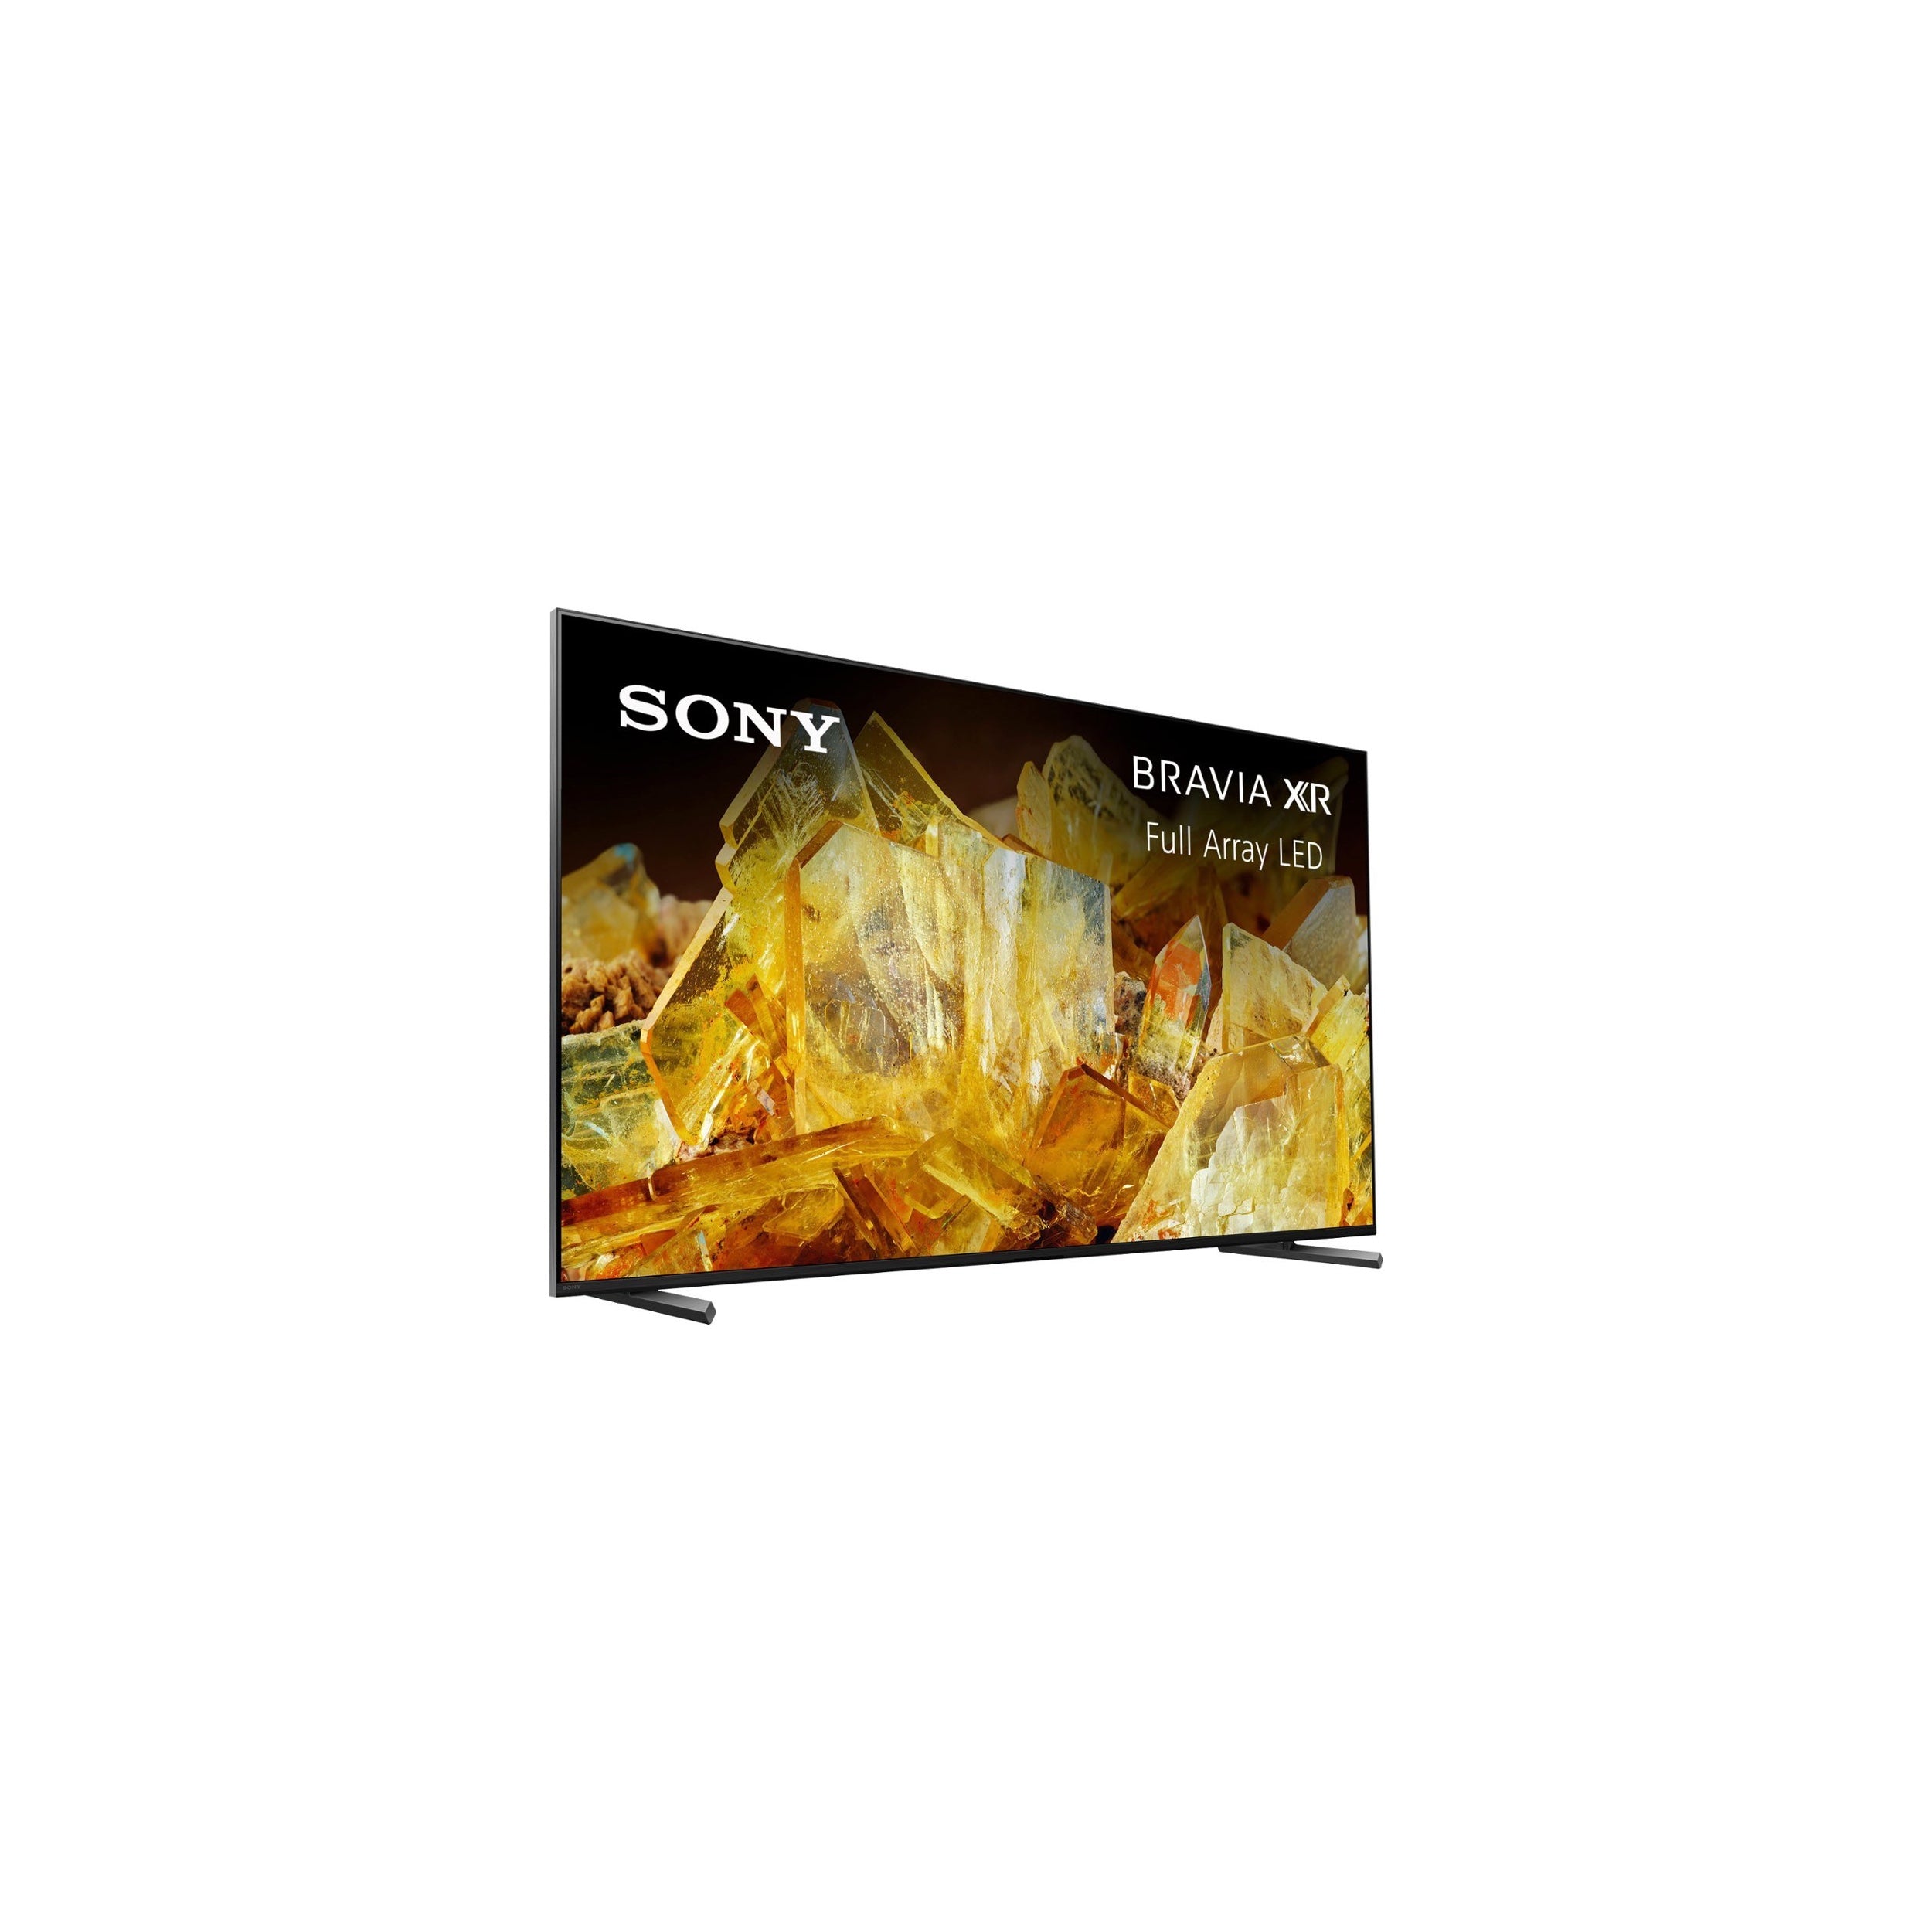 Sony BRAVIA XR X90L 4K HDR Smart LED TV